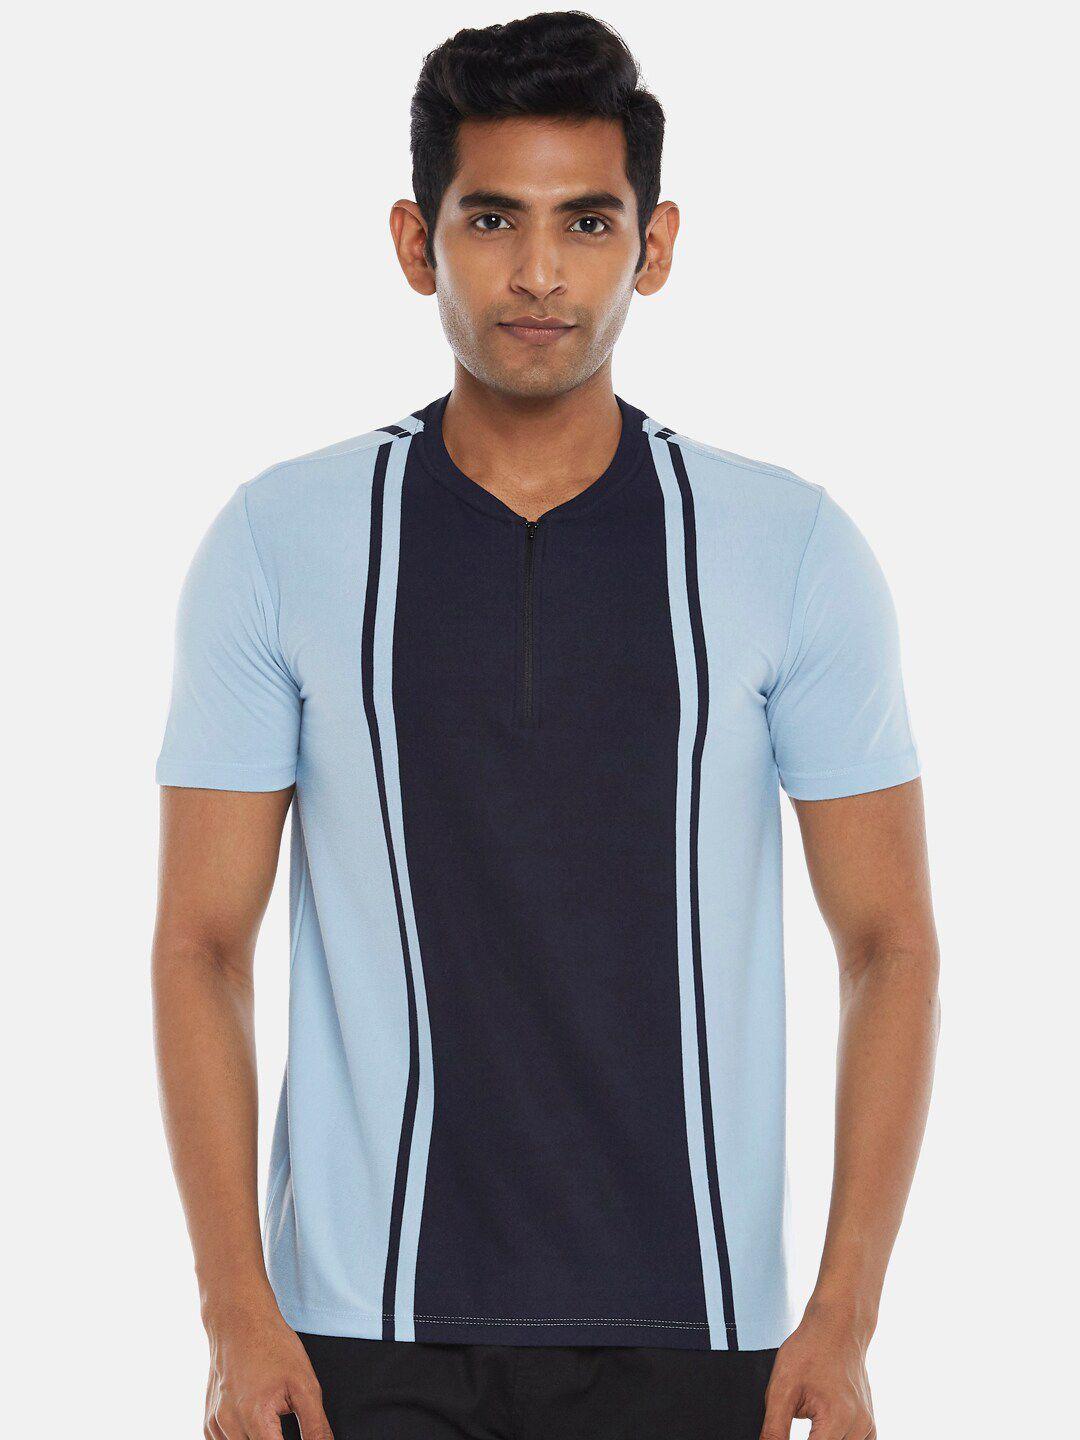 urban ranger by pantaloons men blue striped high neck raw edge slim fit t-shirt